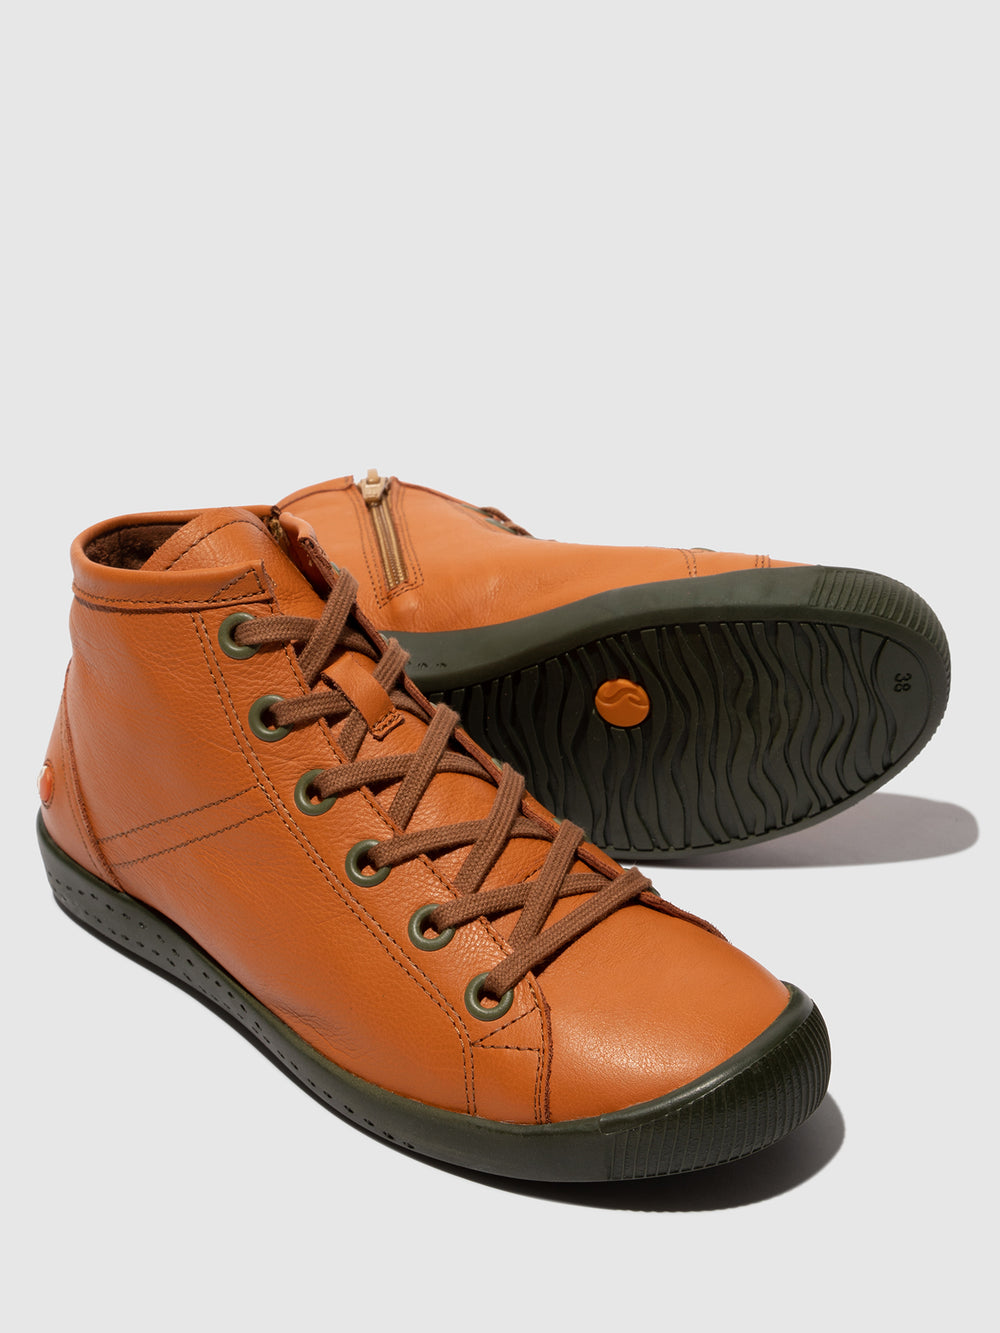 Lace-up Ankle Boots ISLEENIII747 WARM ORANGE W/DK. ARMY SOLE